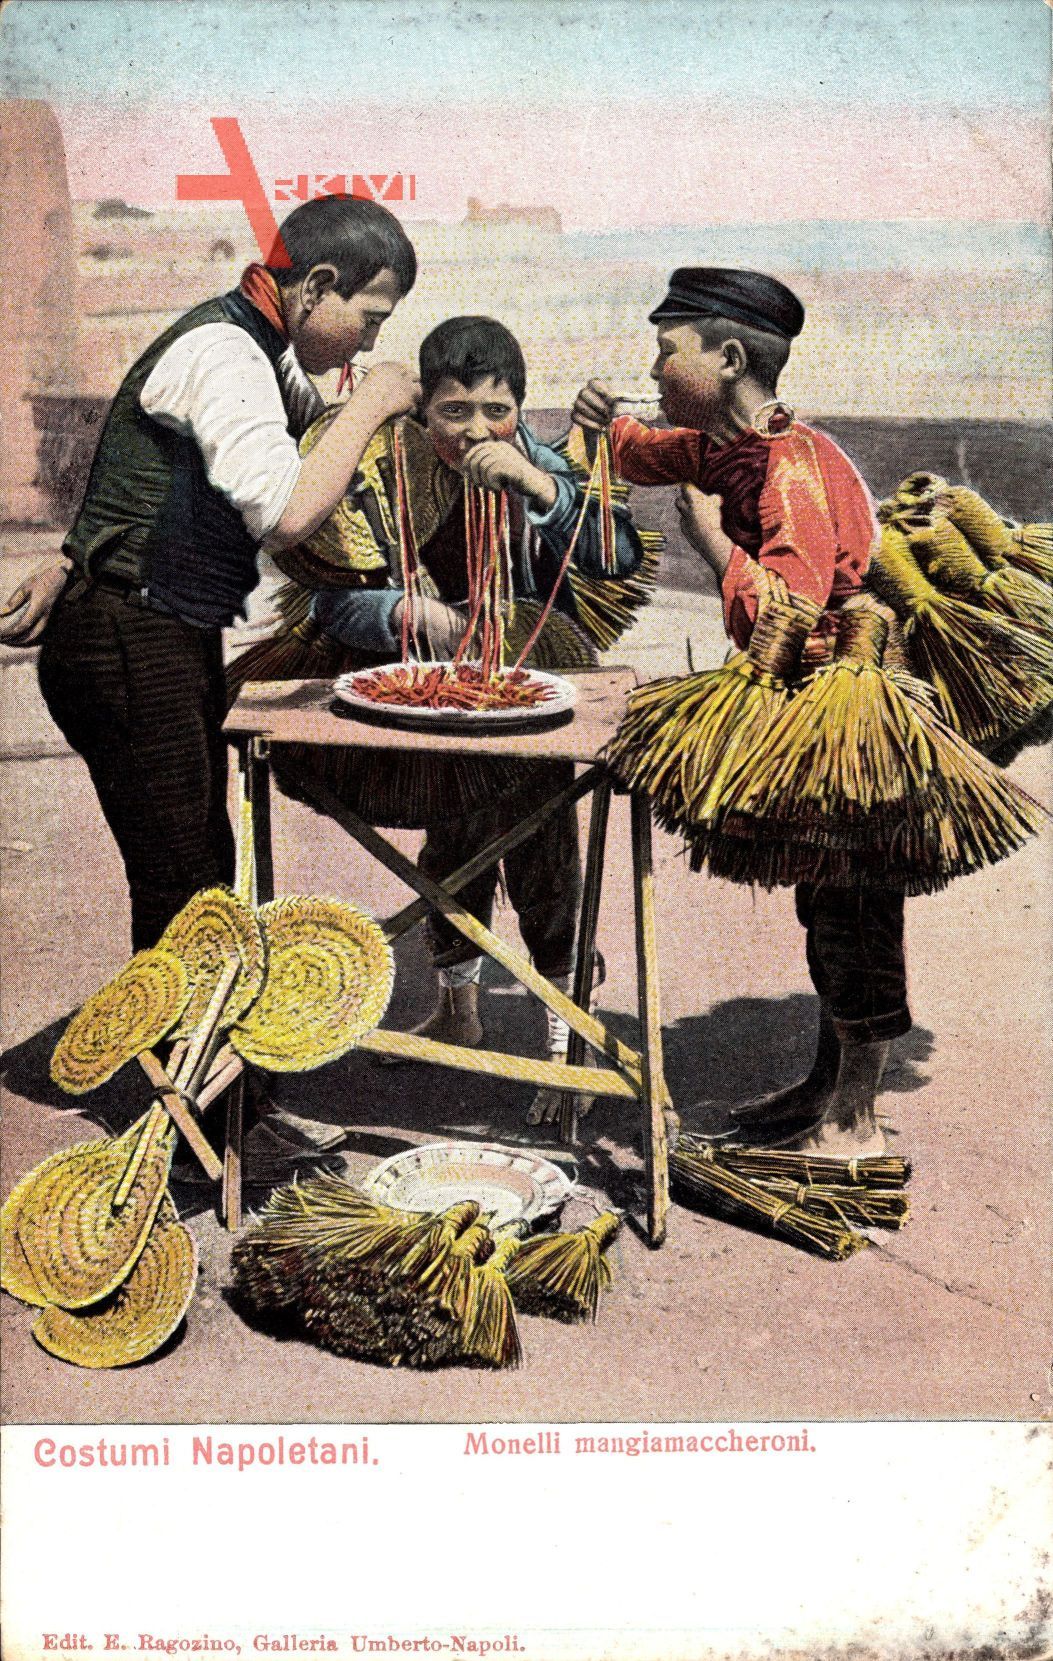 Costumi Napoletani, Monelli mangiamaccheroni, Ital. Kinder essen Nudeln